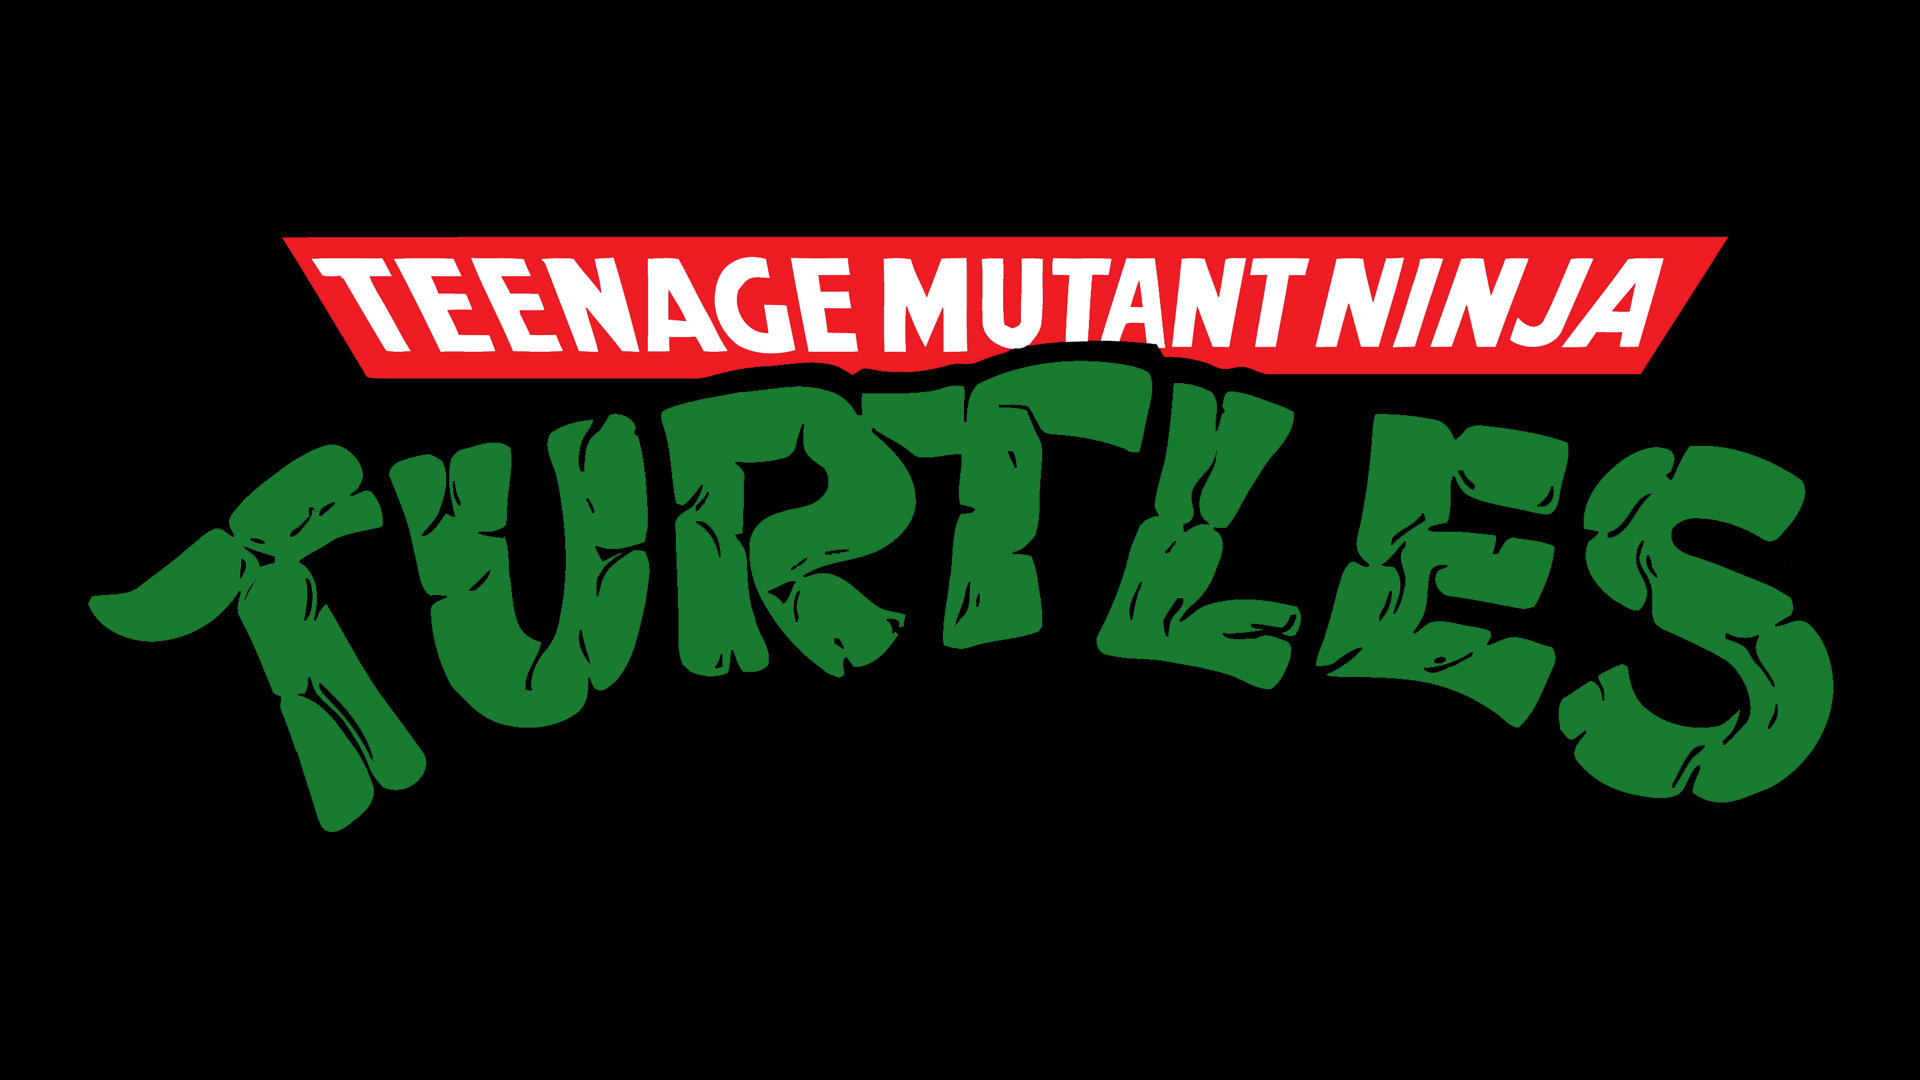 High resolution Teenage Mutant Ninja Turtles (TMNT) 1080p wallpaper ID:111277 for computer